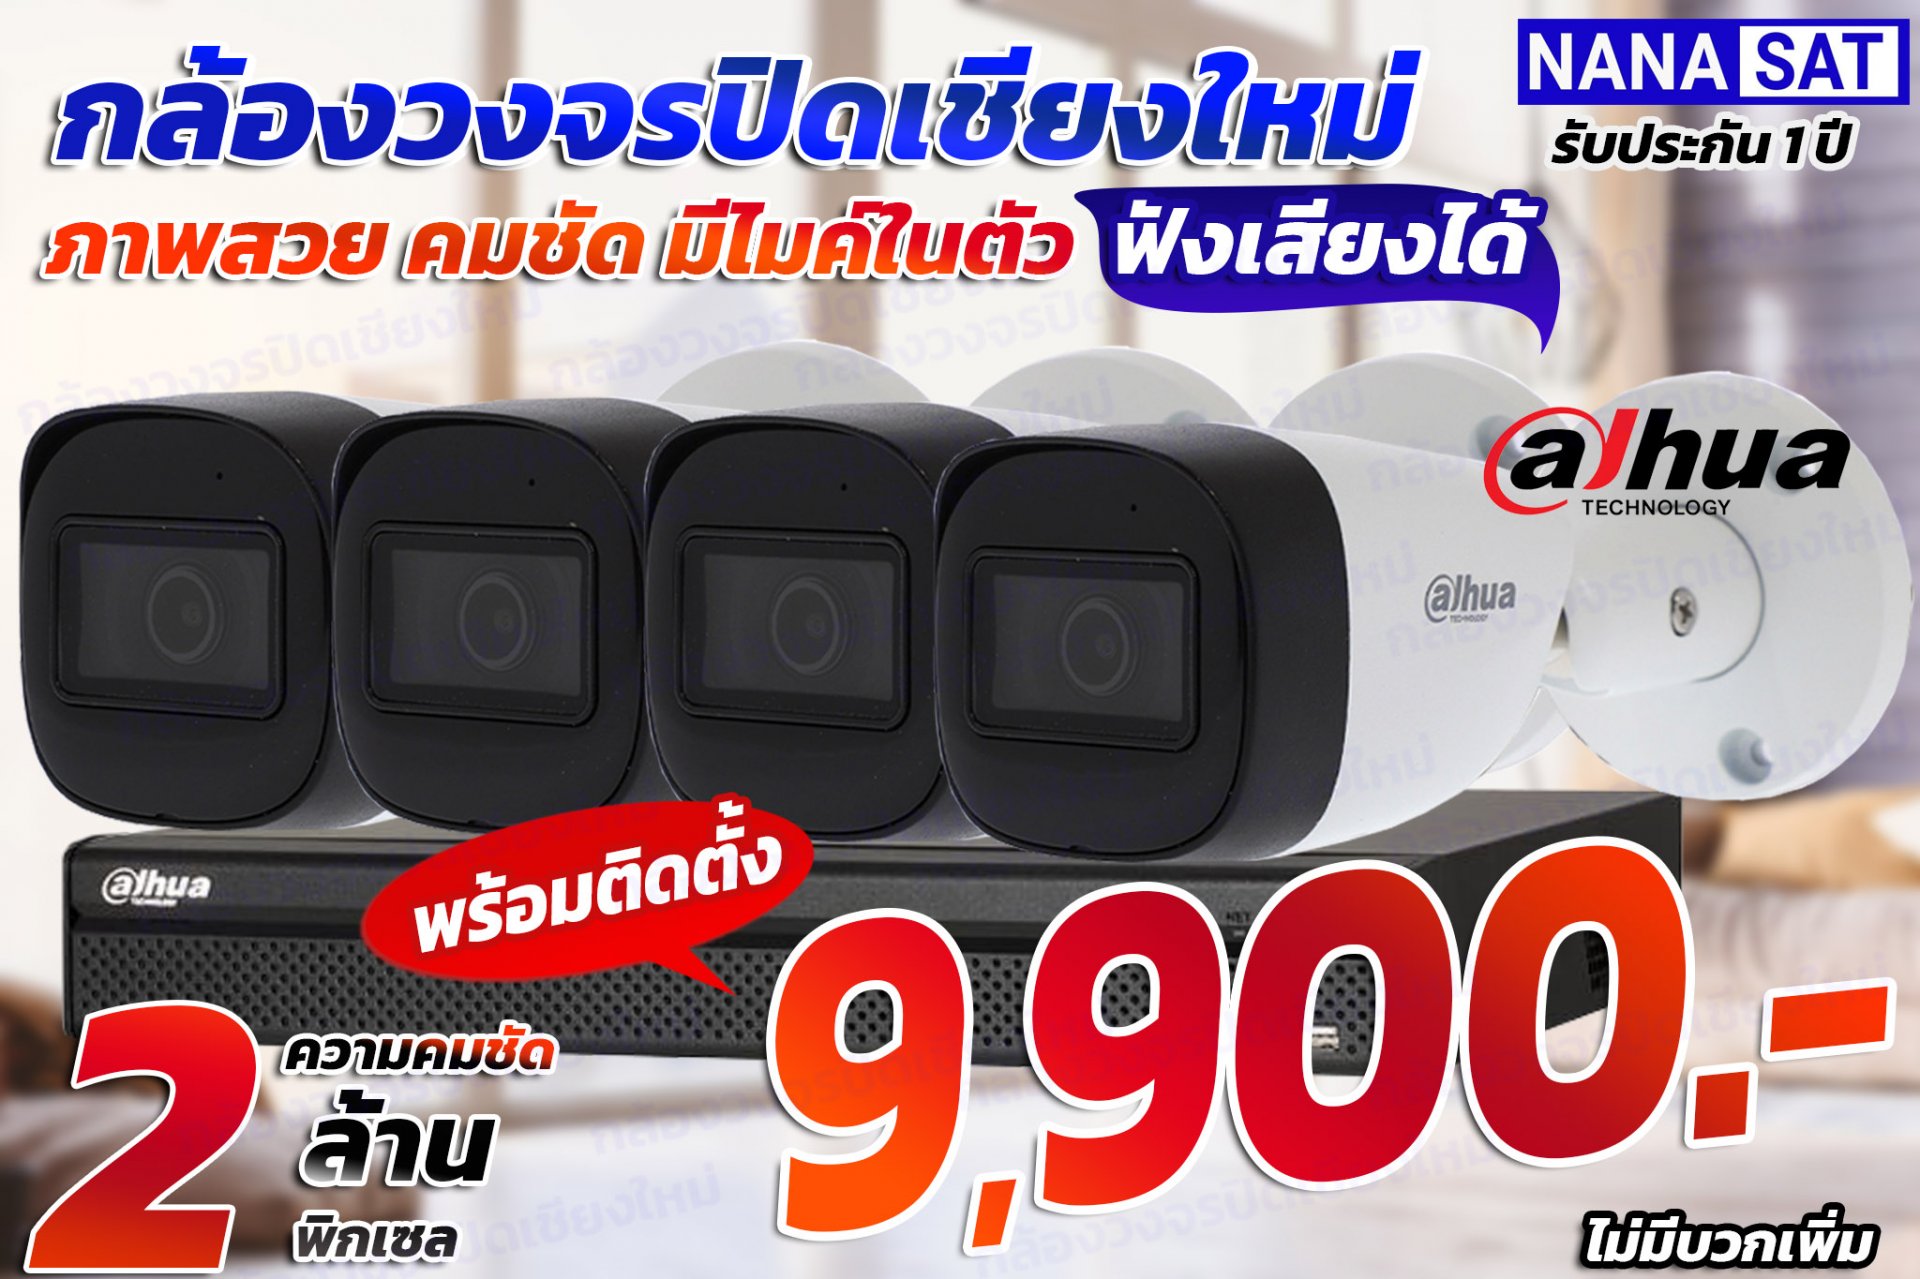 Promotion CCTV ยี่ห้อ DAHUA ราคาสุดคุ้มเพียง 9,900.-